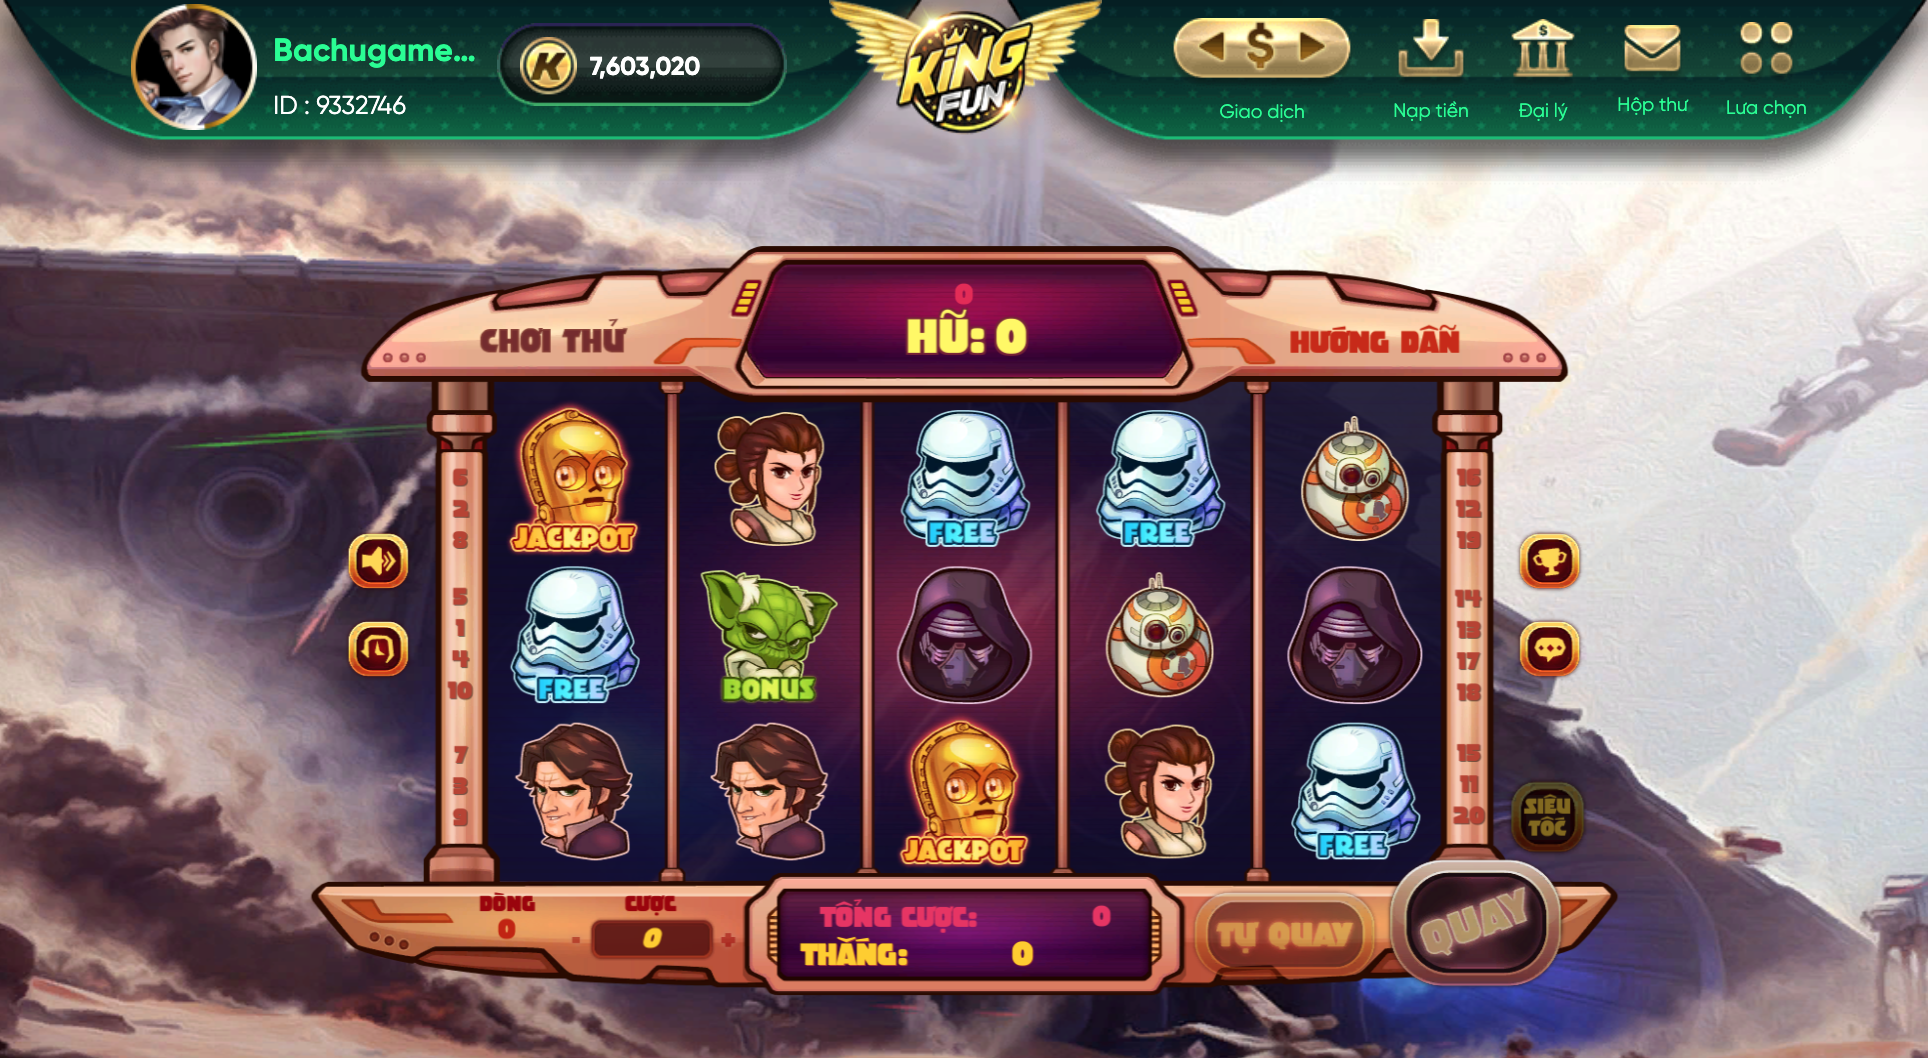 Giao diện slot game Start Wars Kingfun